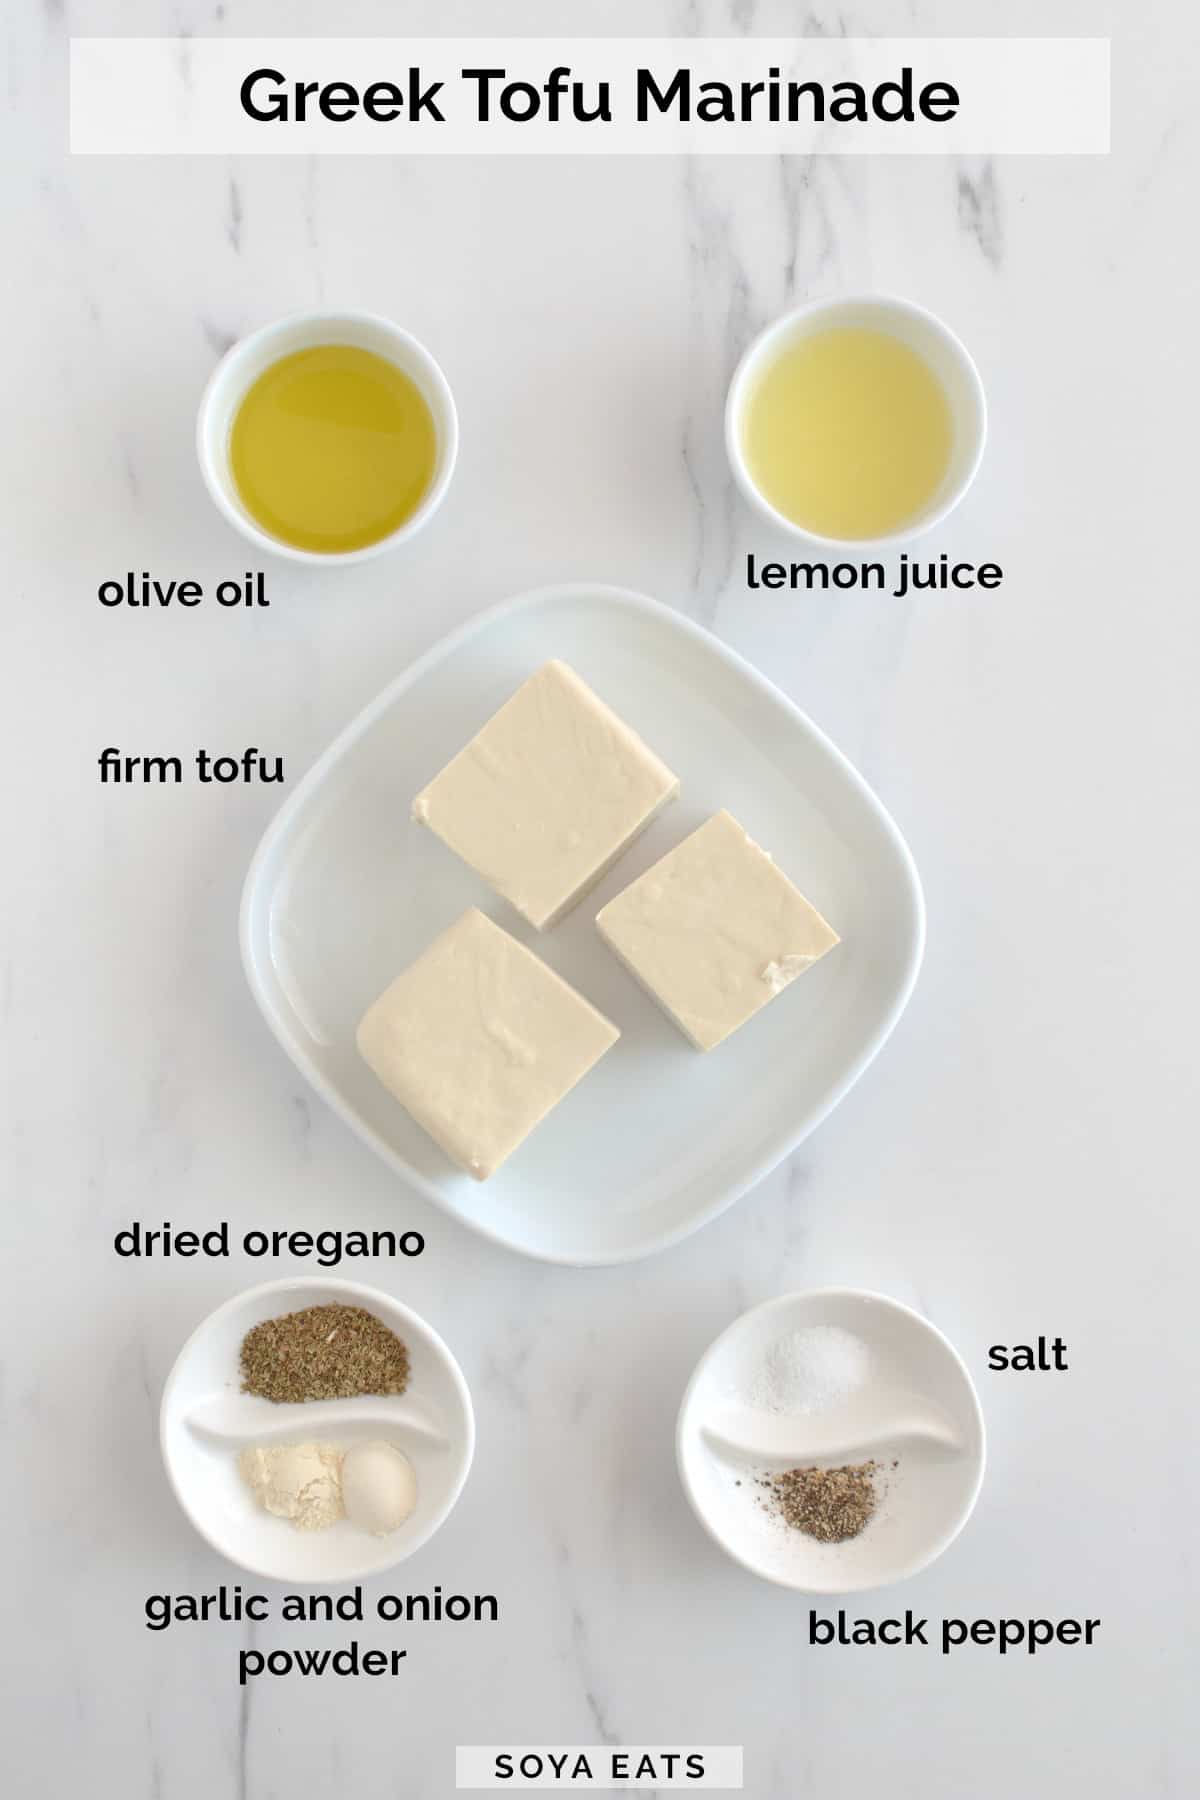 Image of ingredients needed to make a Greek tofu marinade.